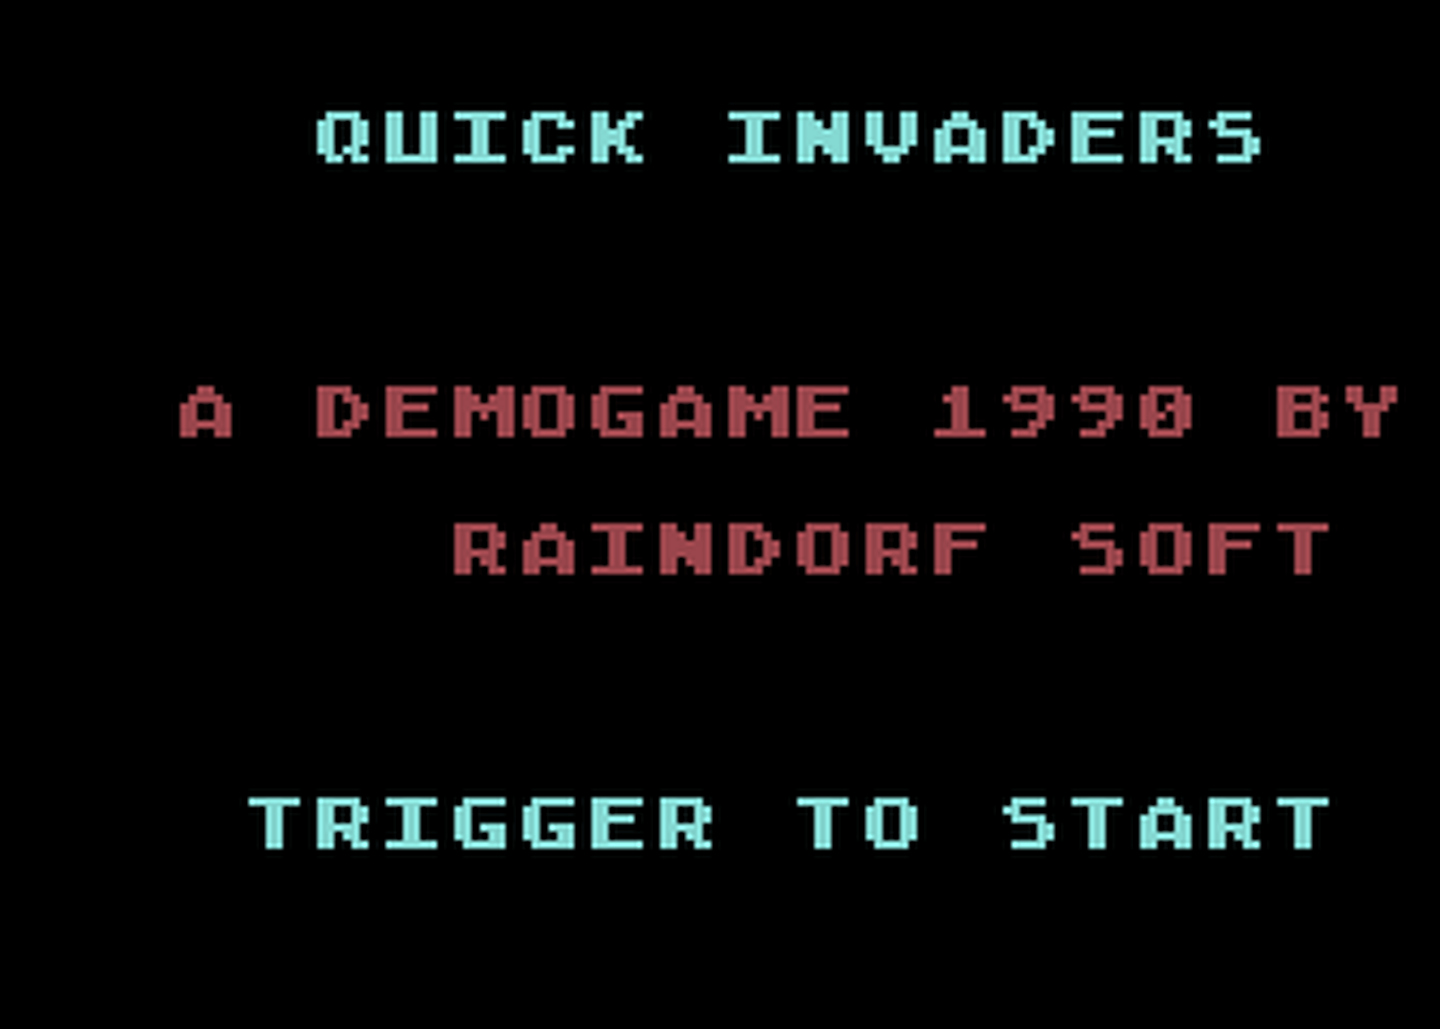 Atari GameBase Quick_Invaders Raindorfsoft 1990